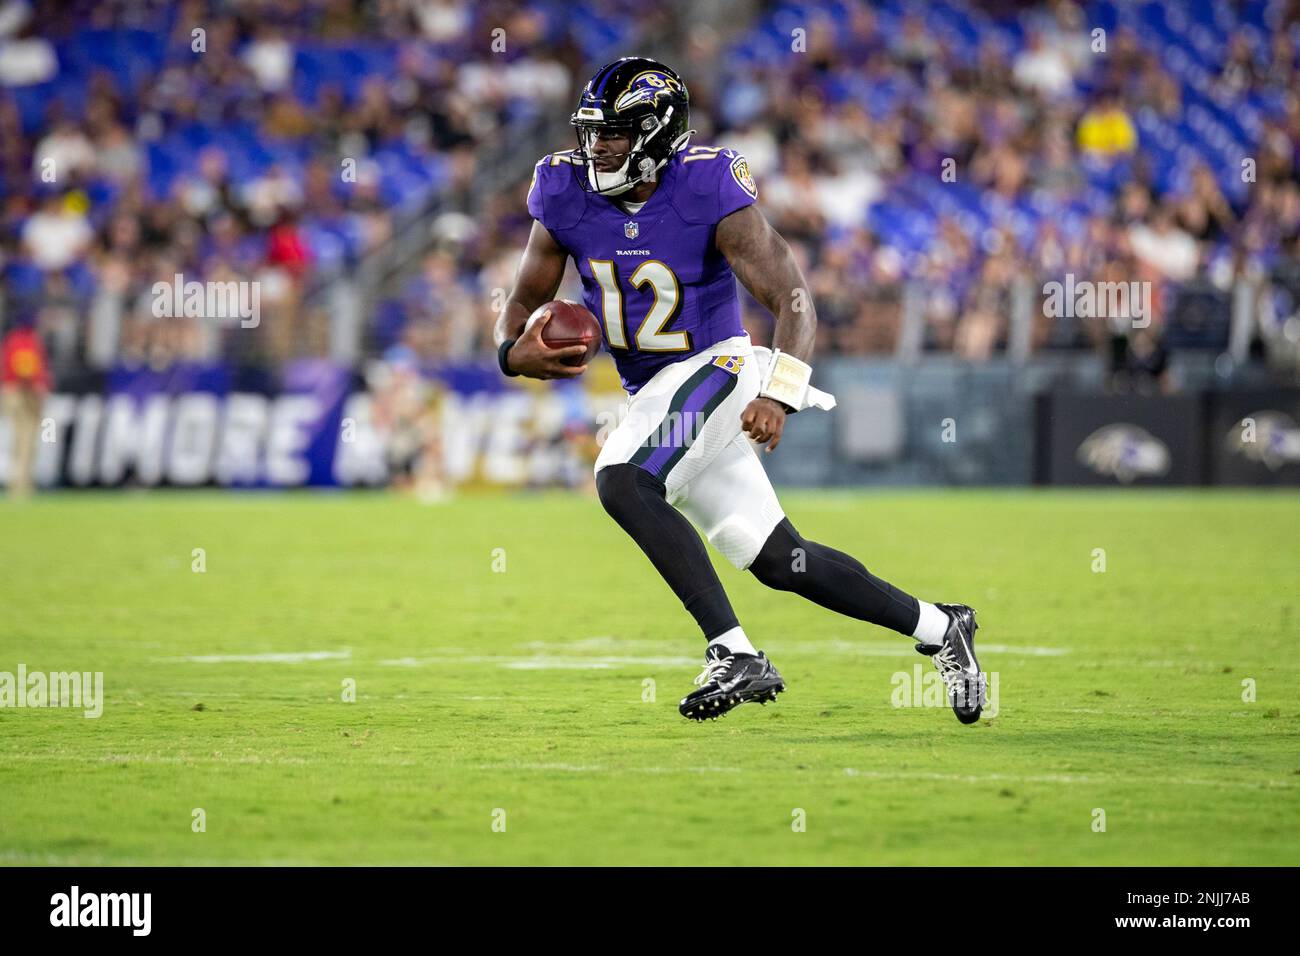 BALTIMORE, MD - AUGUST 11: Baltimore Ravens quarterback Anthony